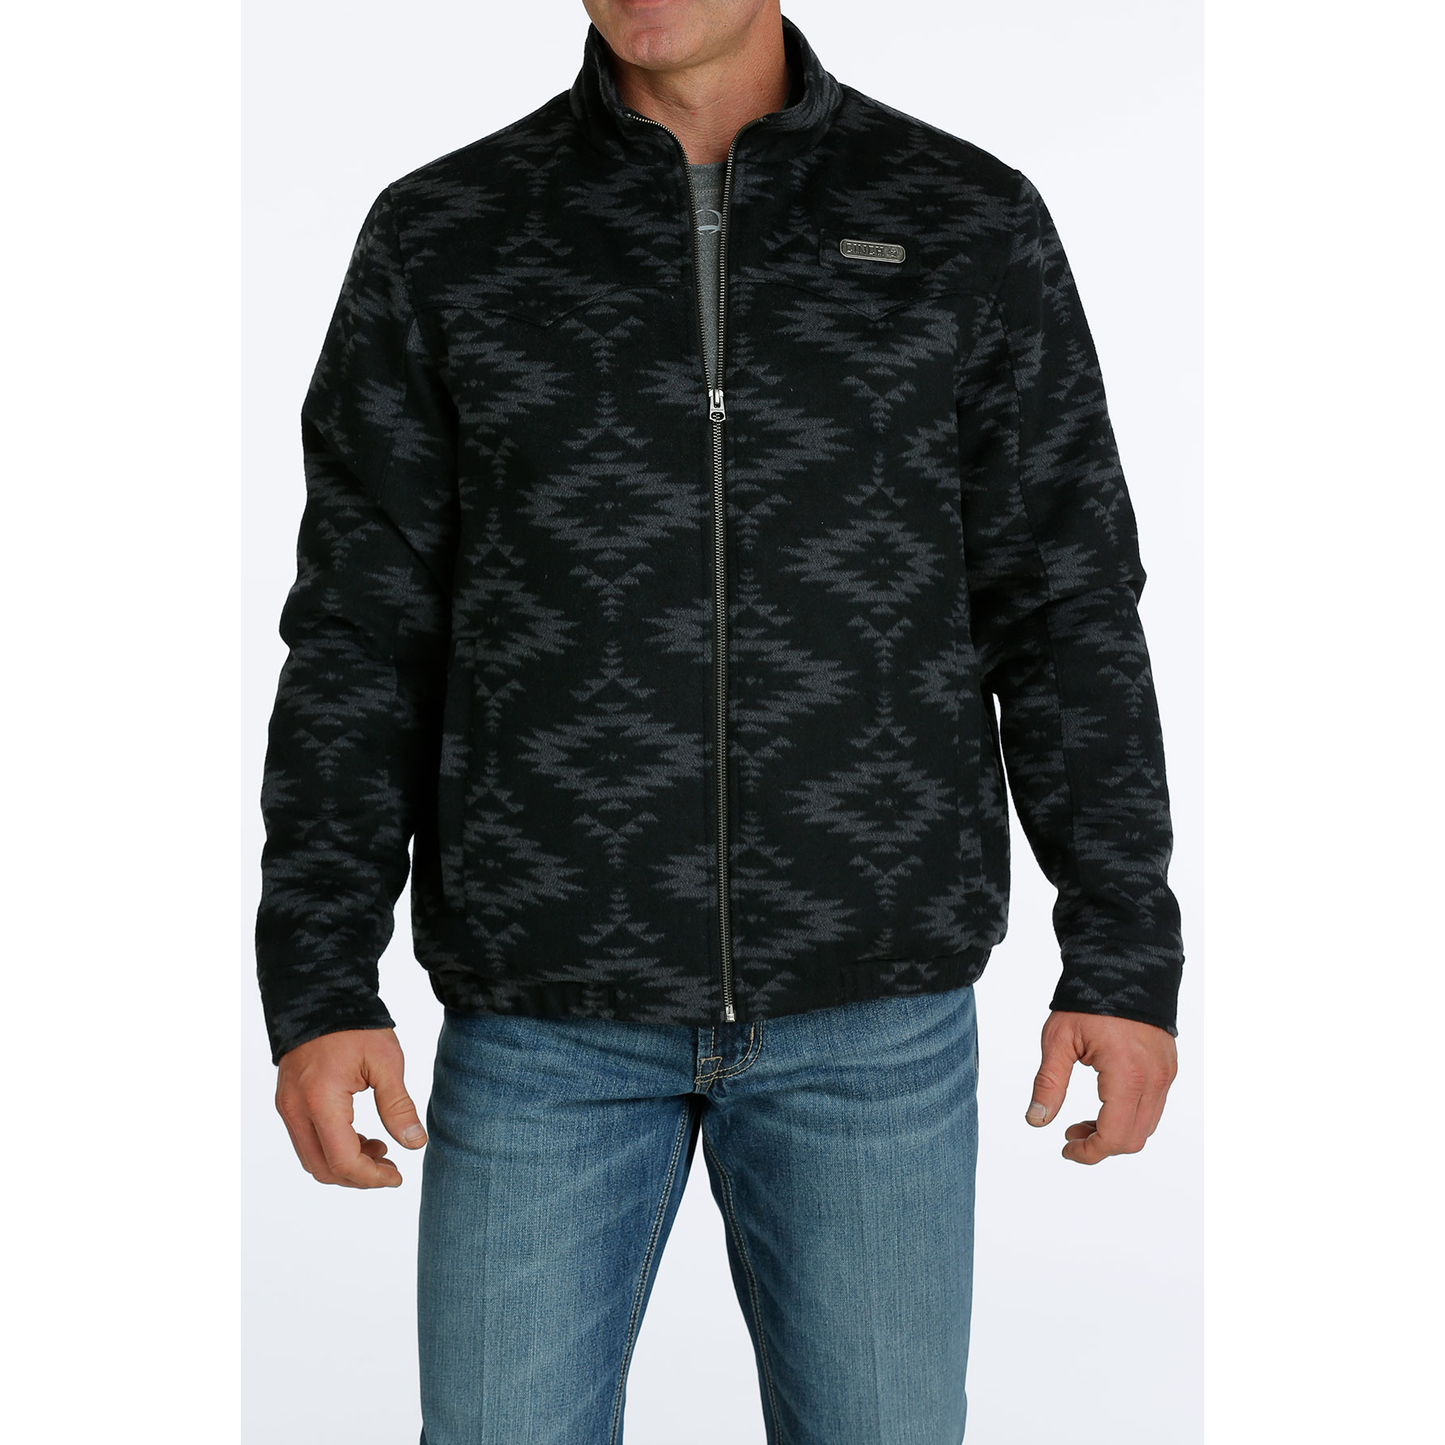 Cinch Men's Black & Grey Aztec Print Conceal Carry Wooly Jacket MWJ1590002